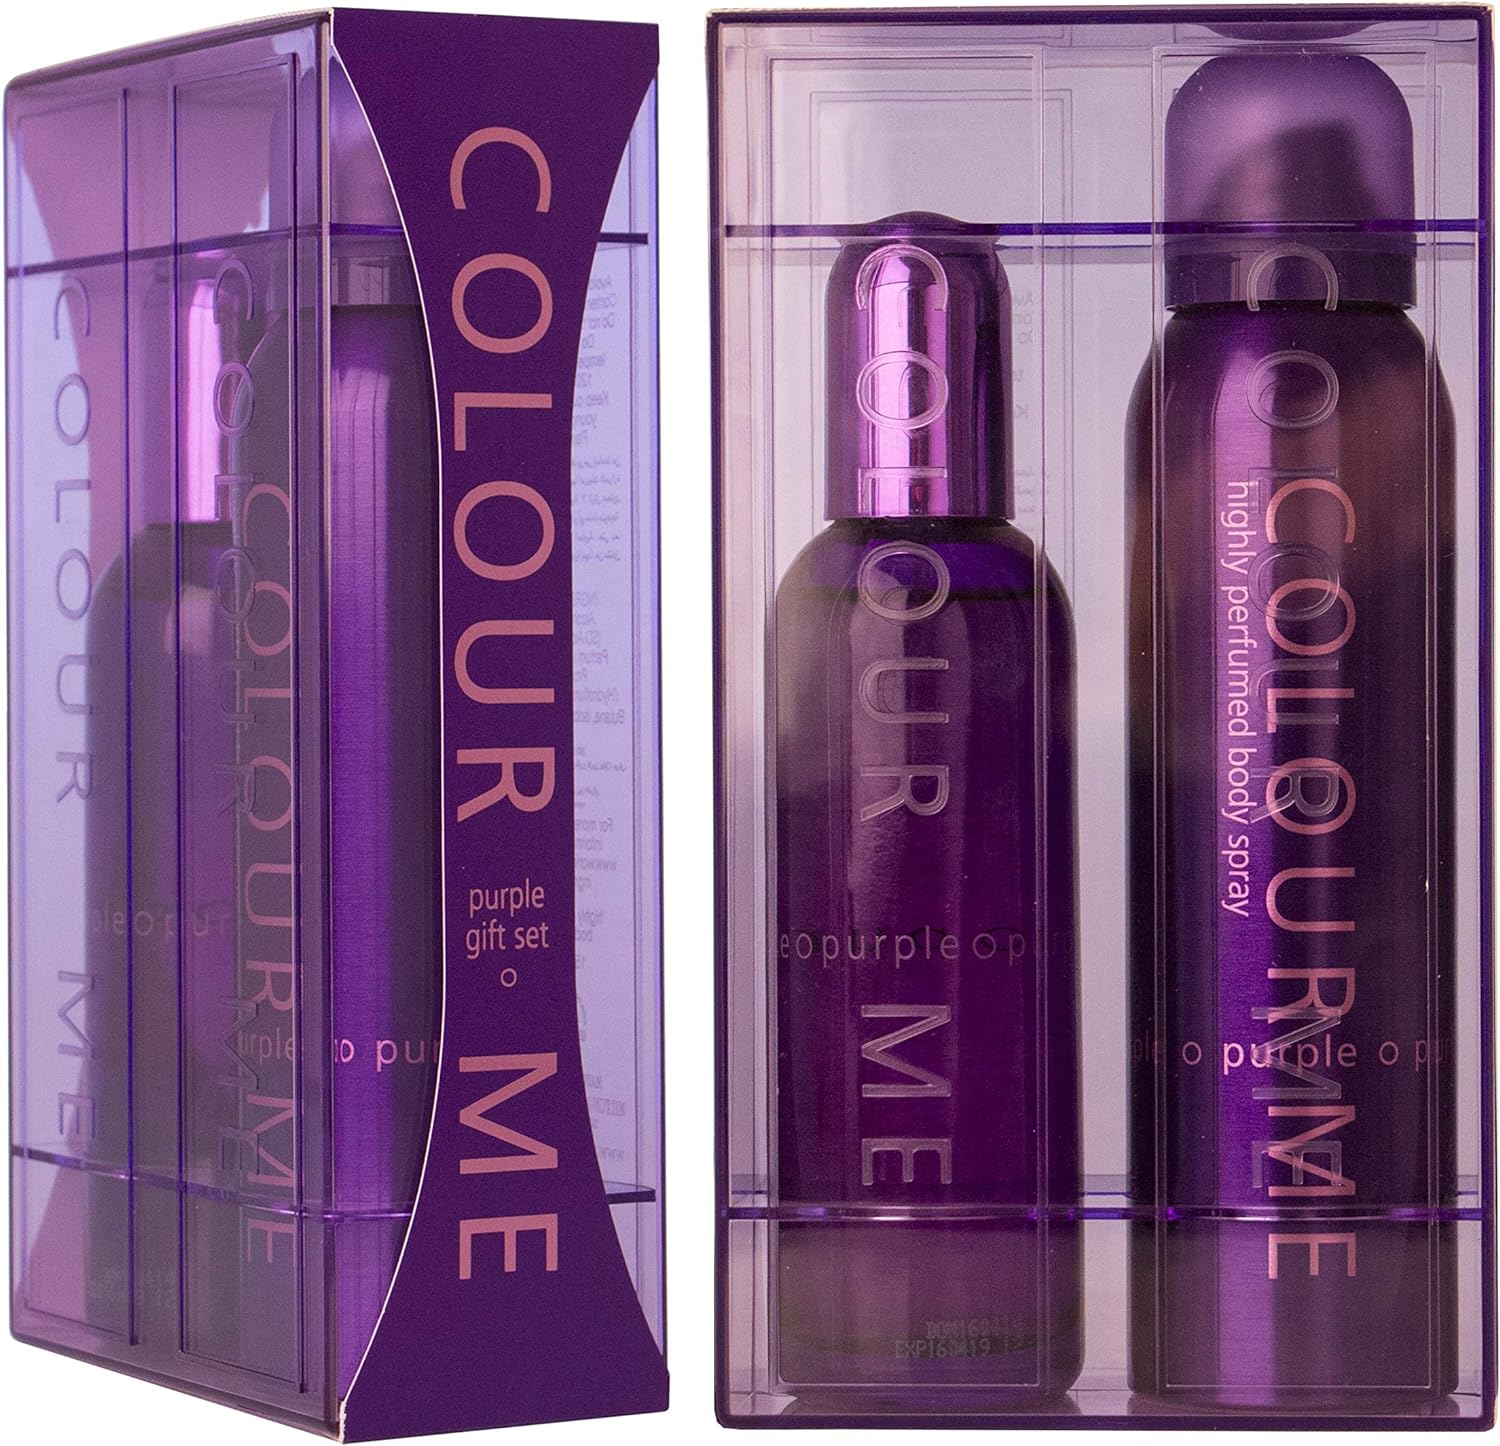 Colour Me Purple casket fragrance 100ml/body spray